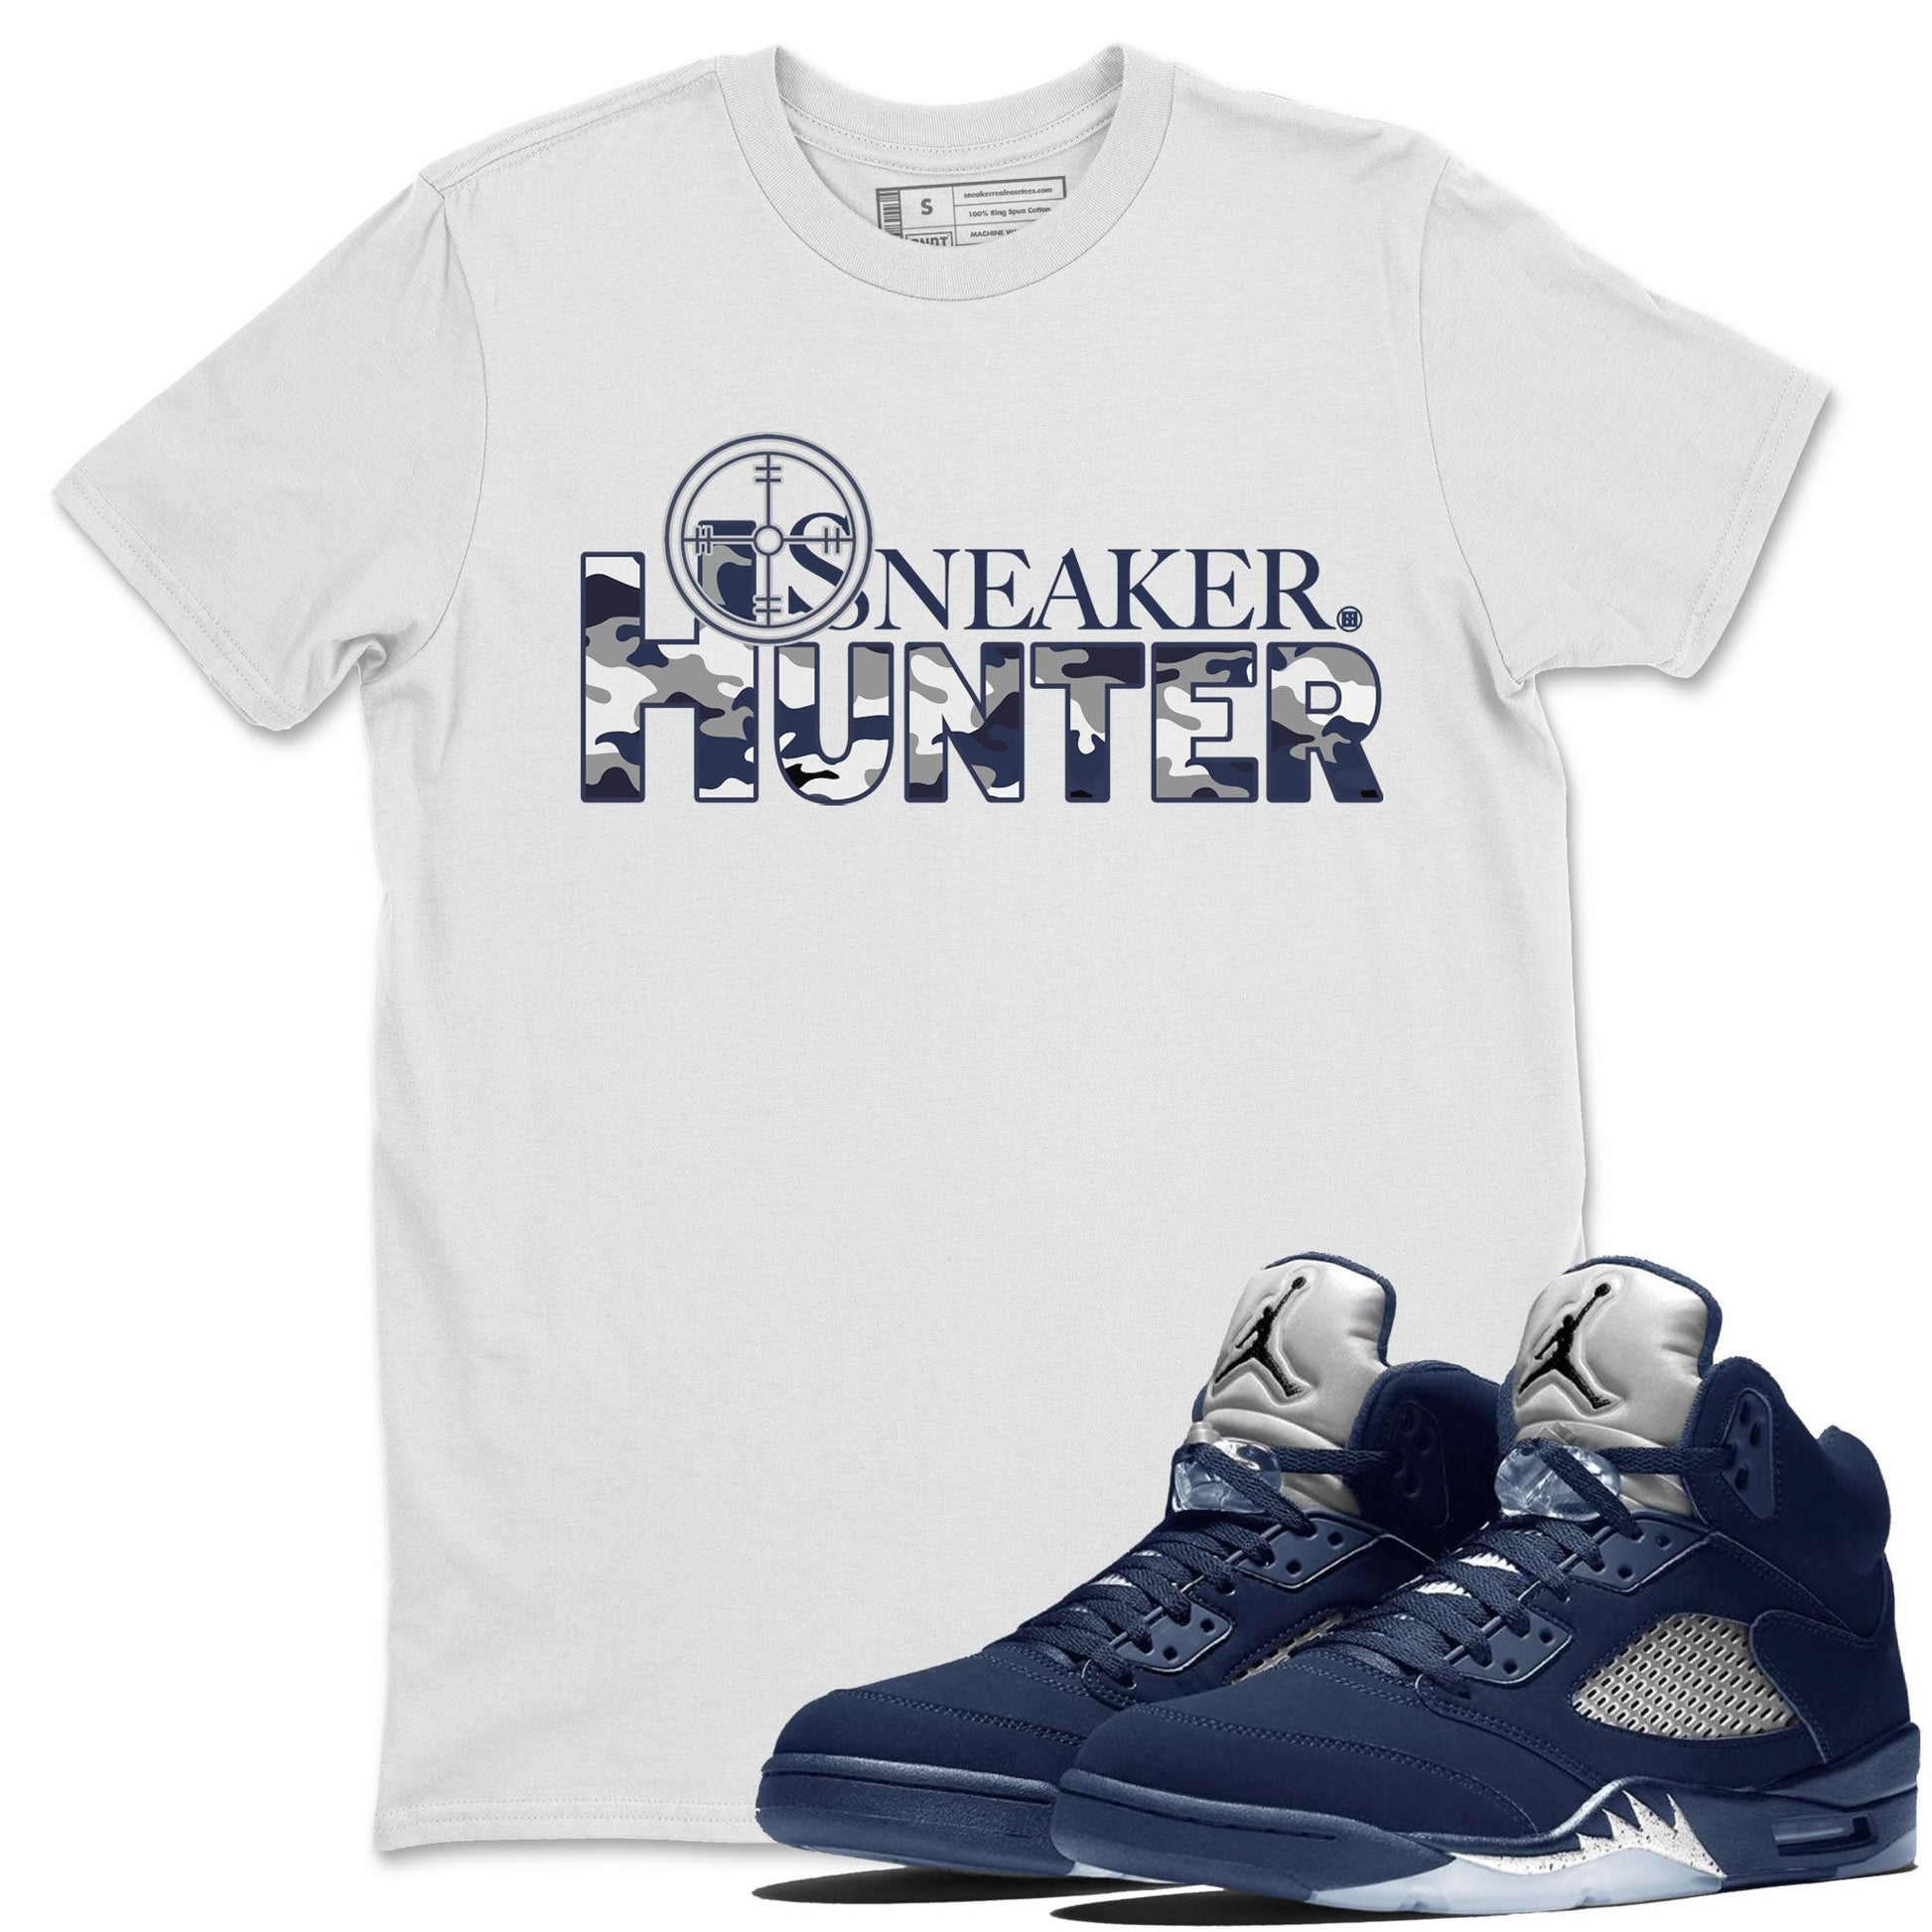 Air Jordan 5 Retro Midnight Navy shirt to match jordans Sneaker Hunter sneaker tees Air Jordan 5 Midnight Navy SNRT Sneaker Release Tees Unisex White 1 T-Shirt